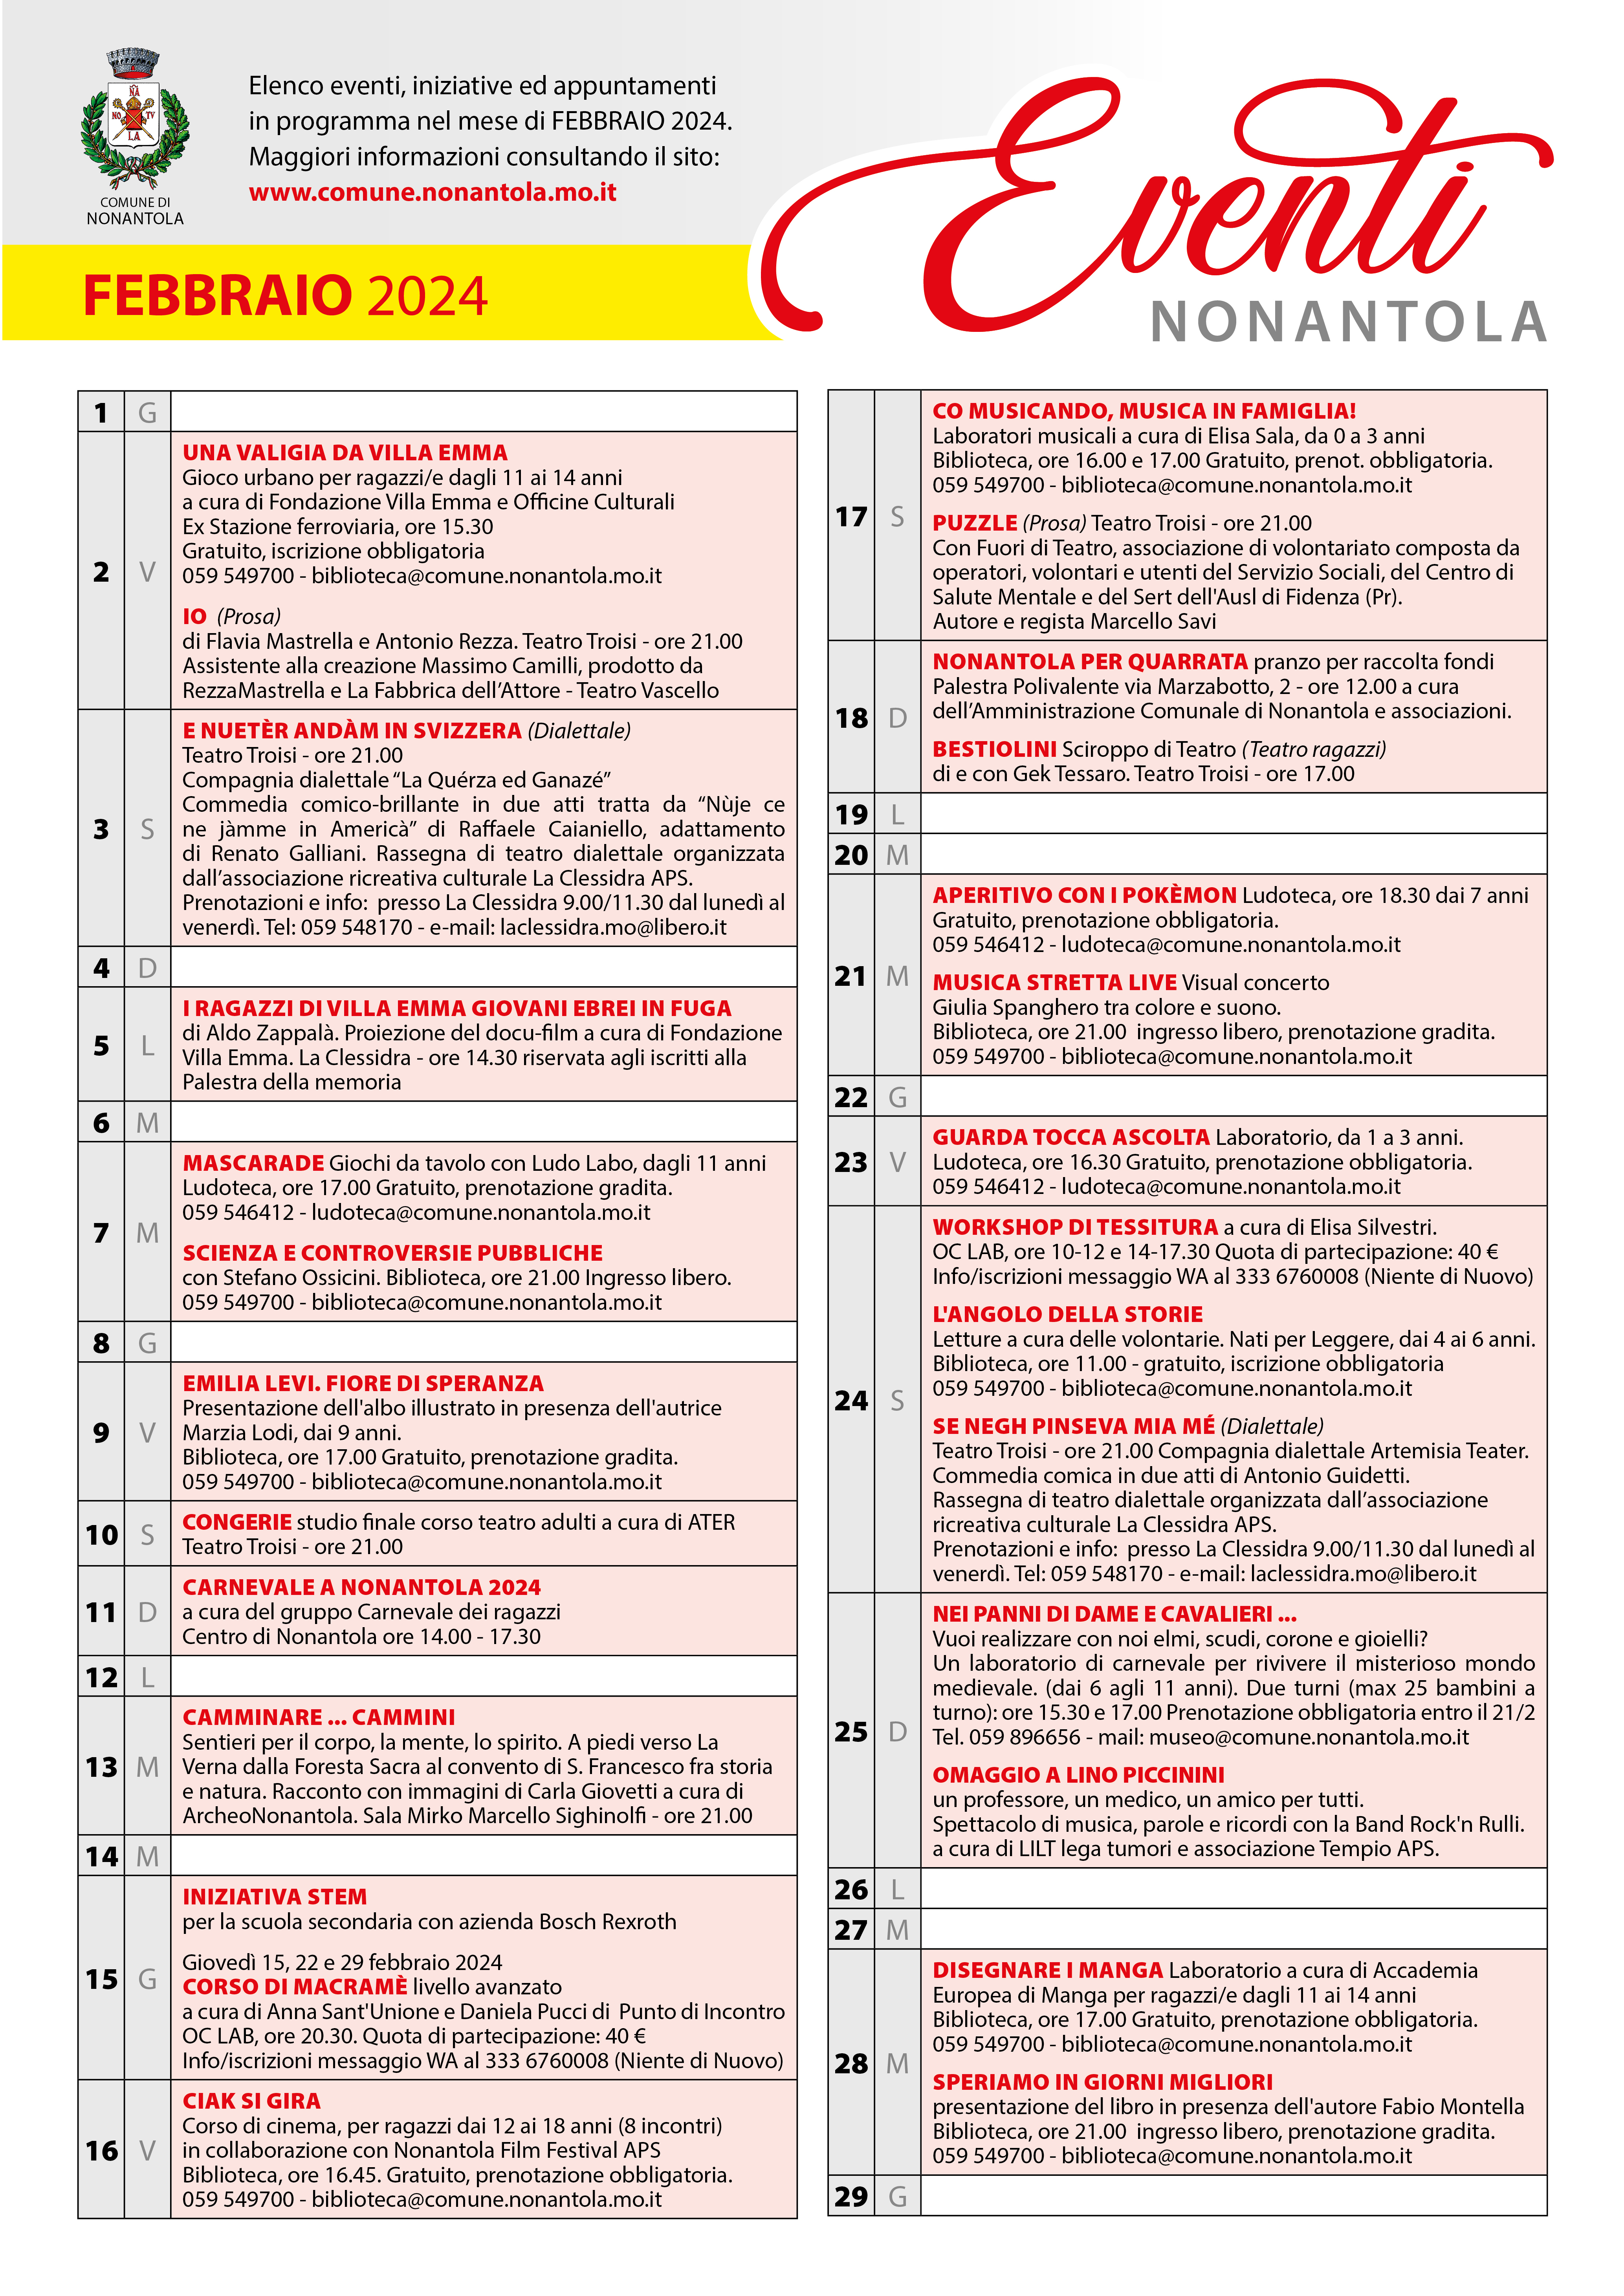 Calendario iniziative a Nonantola, Febbraio 2024